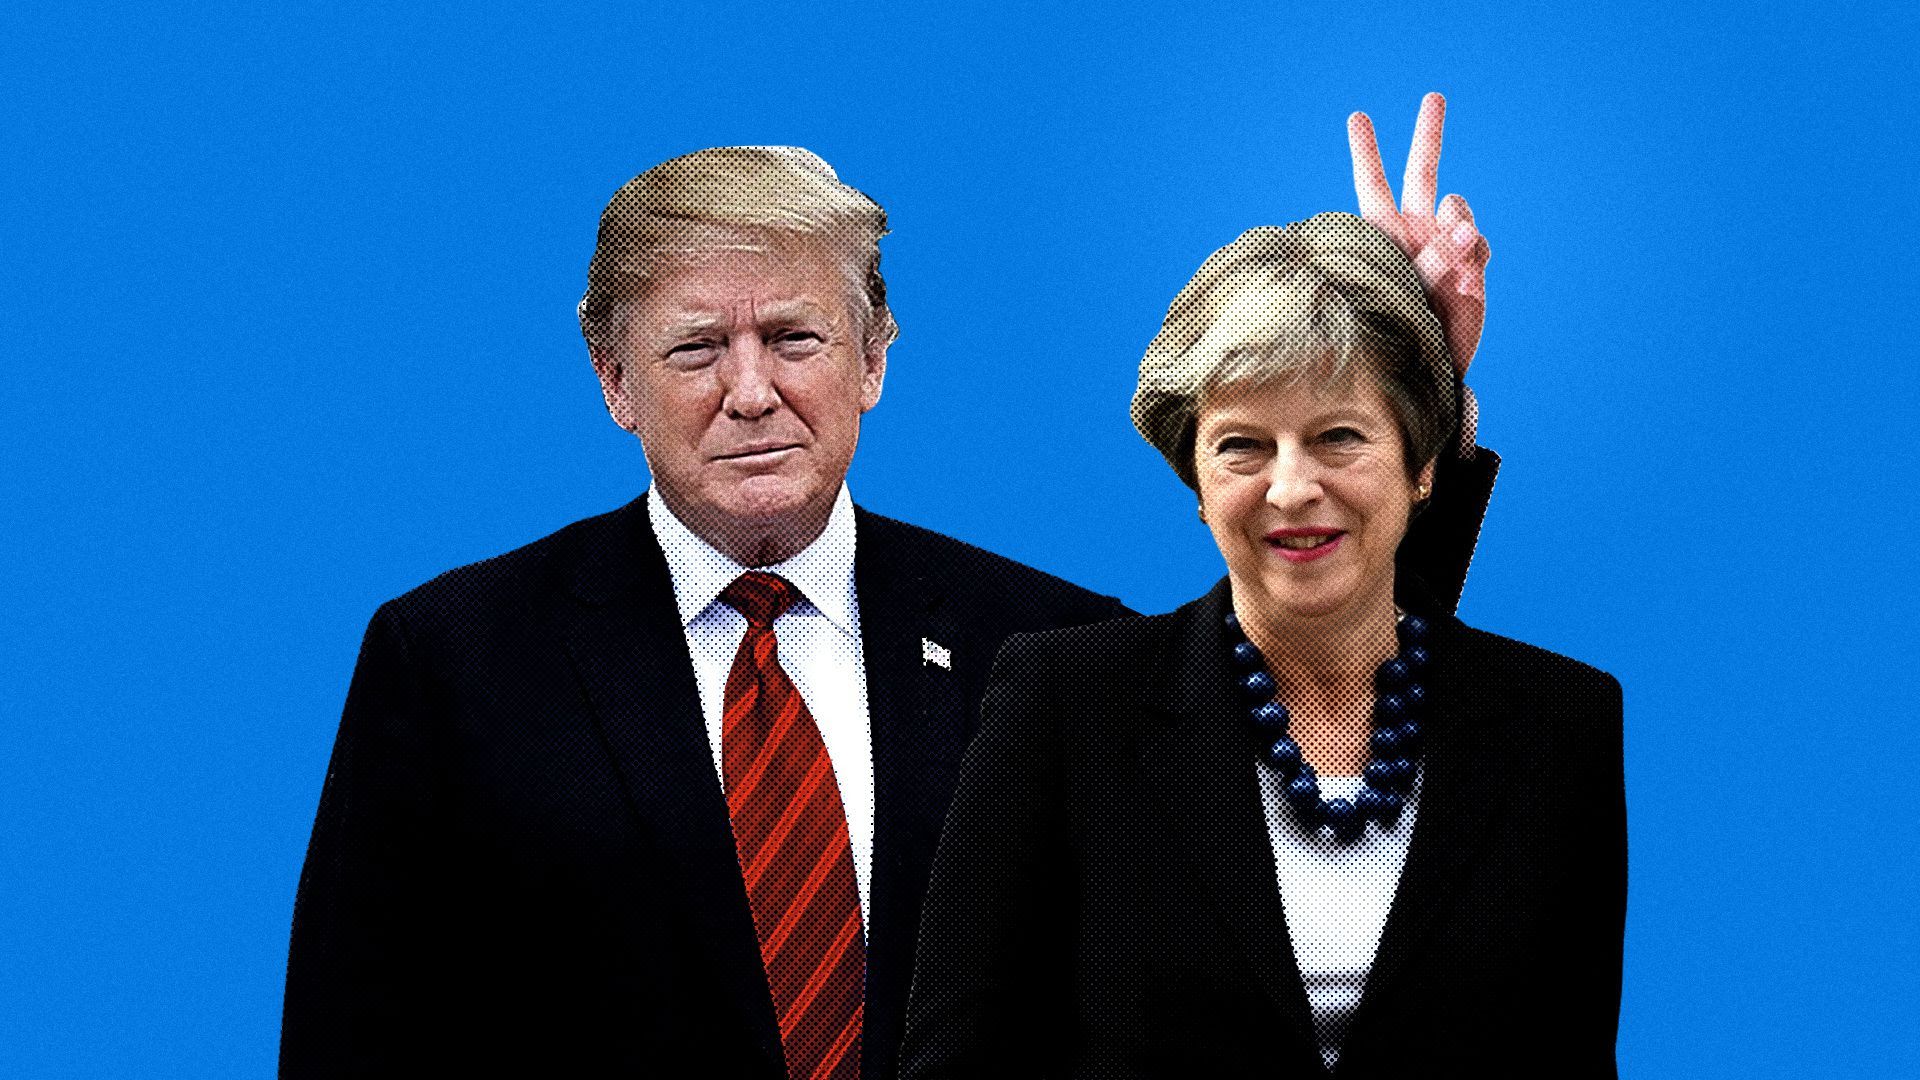 Illustration of Trump making a peace sign behind Theresa May's head